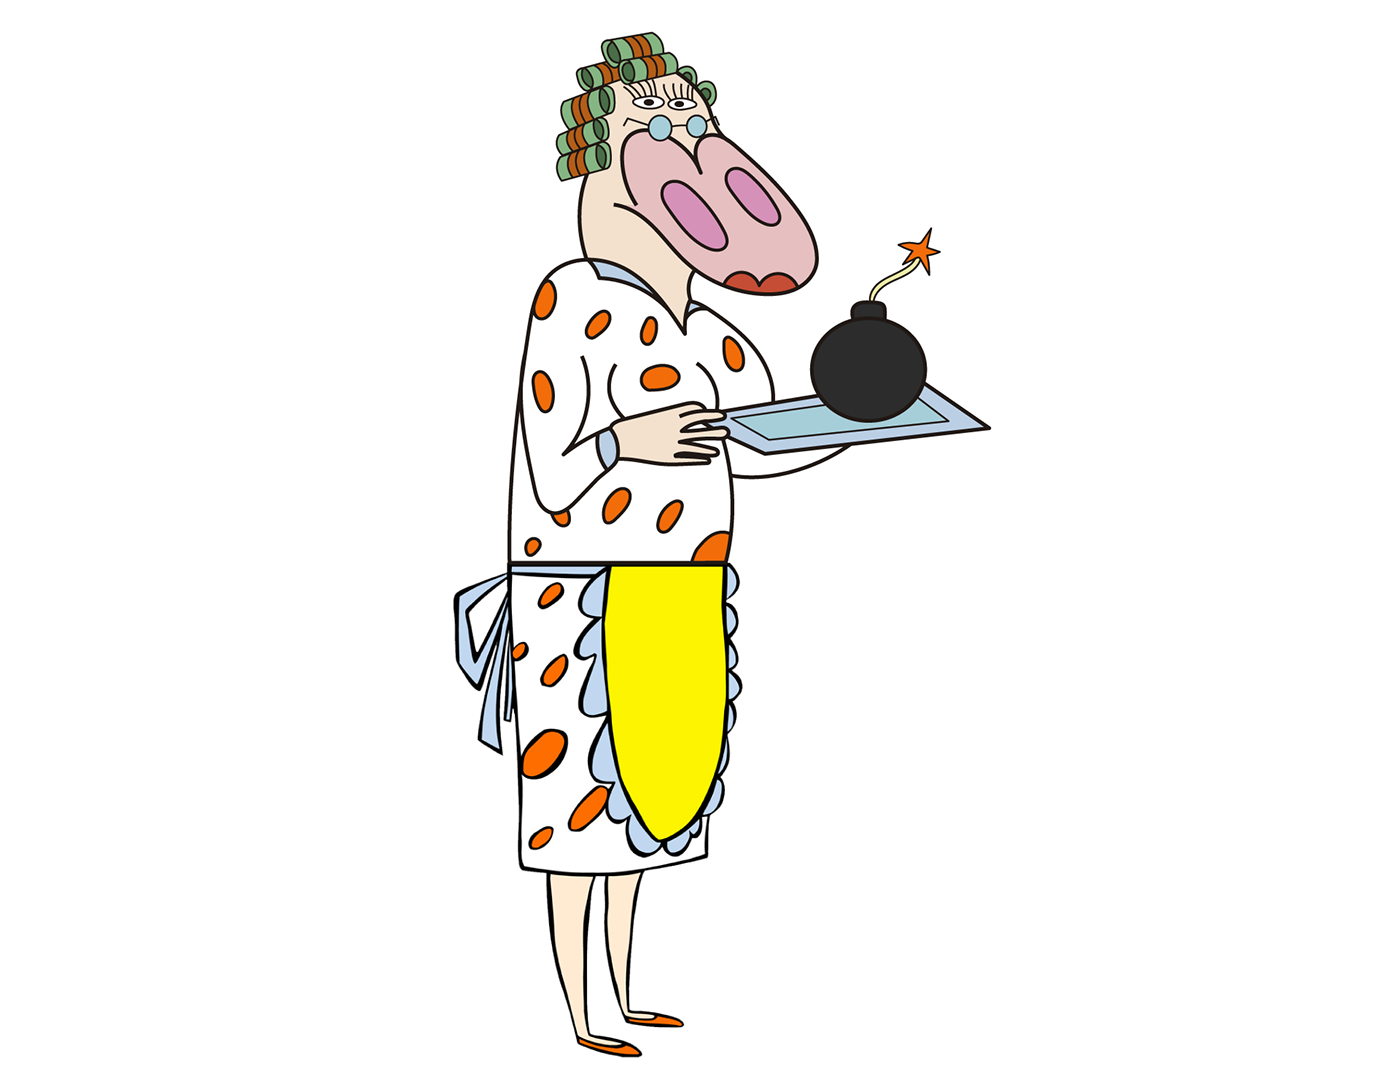 Vaca Pollito cow chicken doodle google cartoon network cartoonnetwork characters